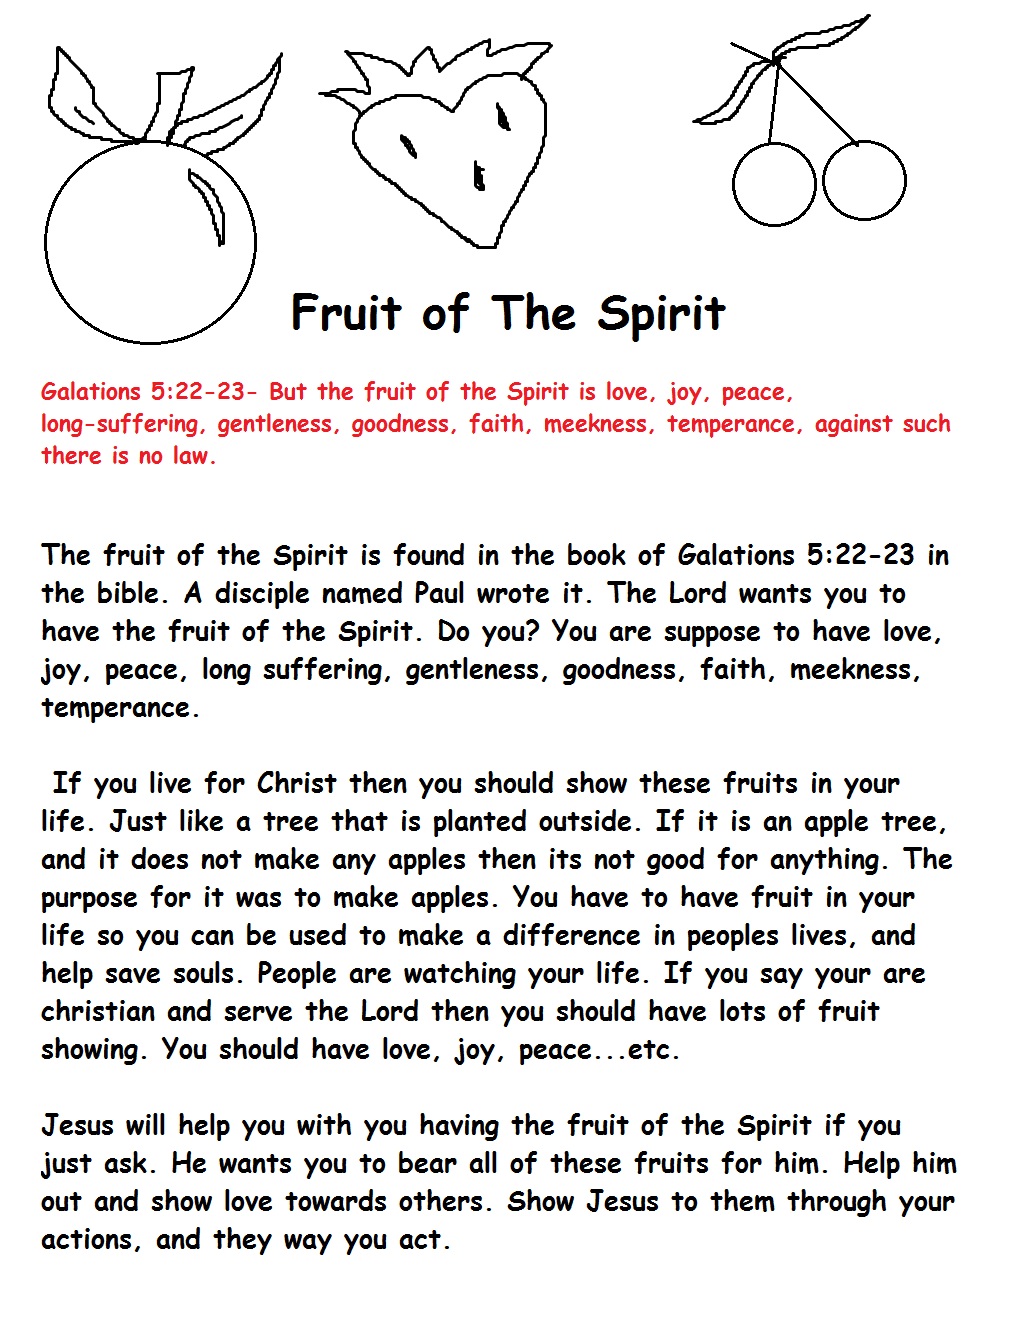 Fruit of The Spirit Sunday School Lesson